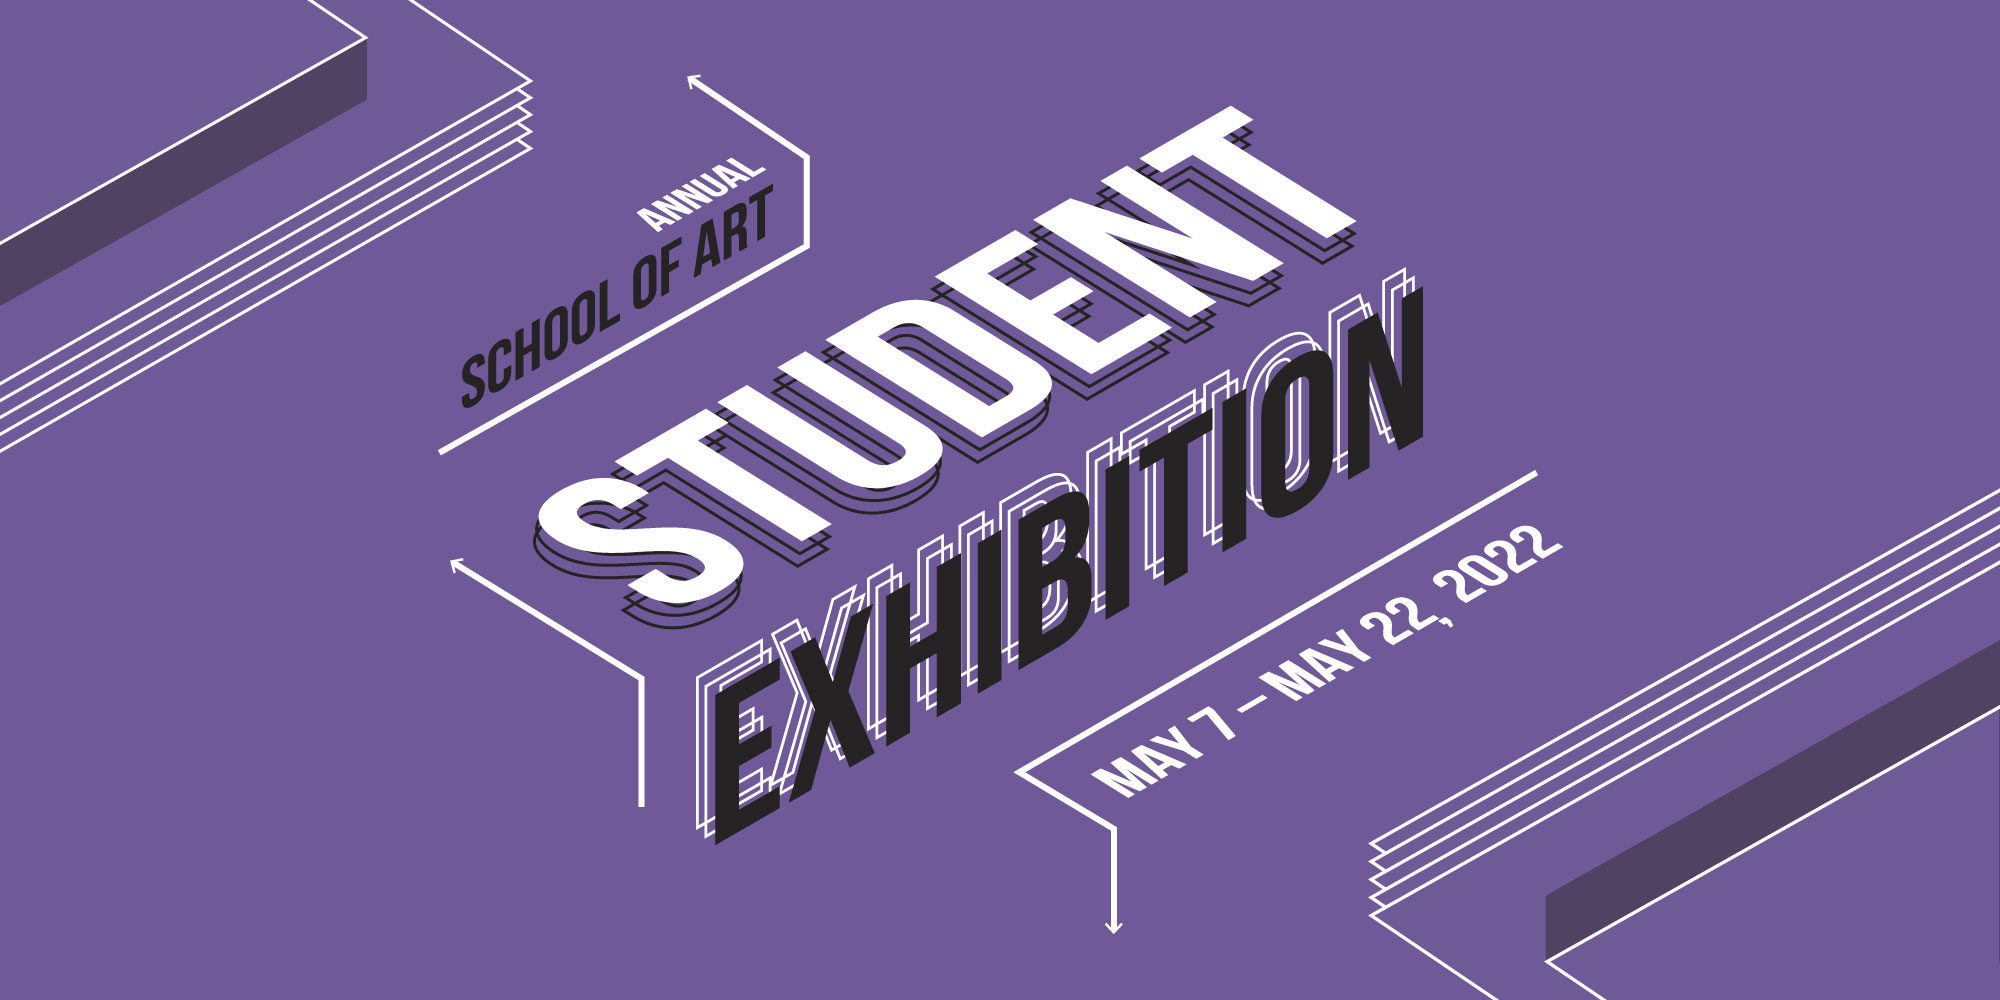 UH School of Art Annual Student Exhibition